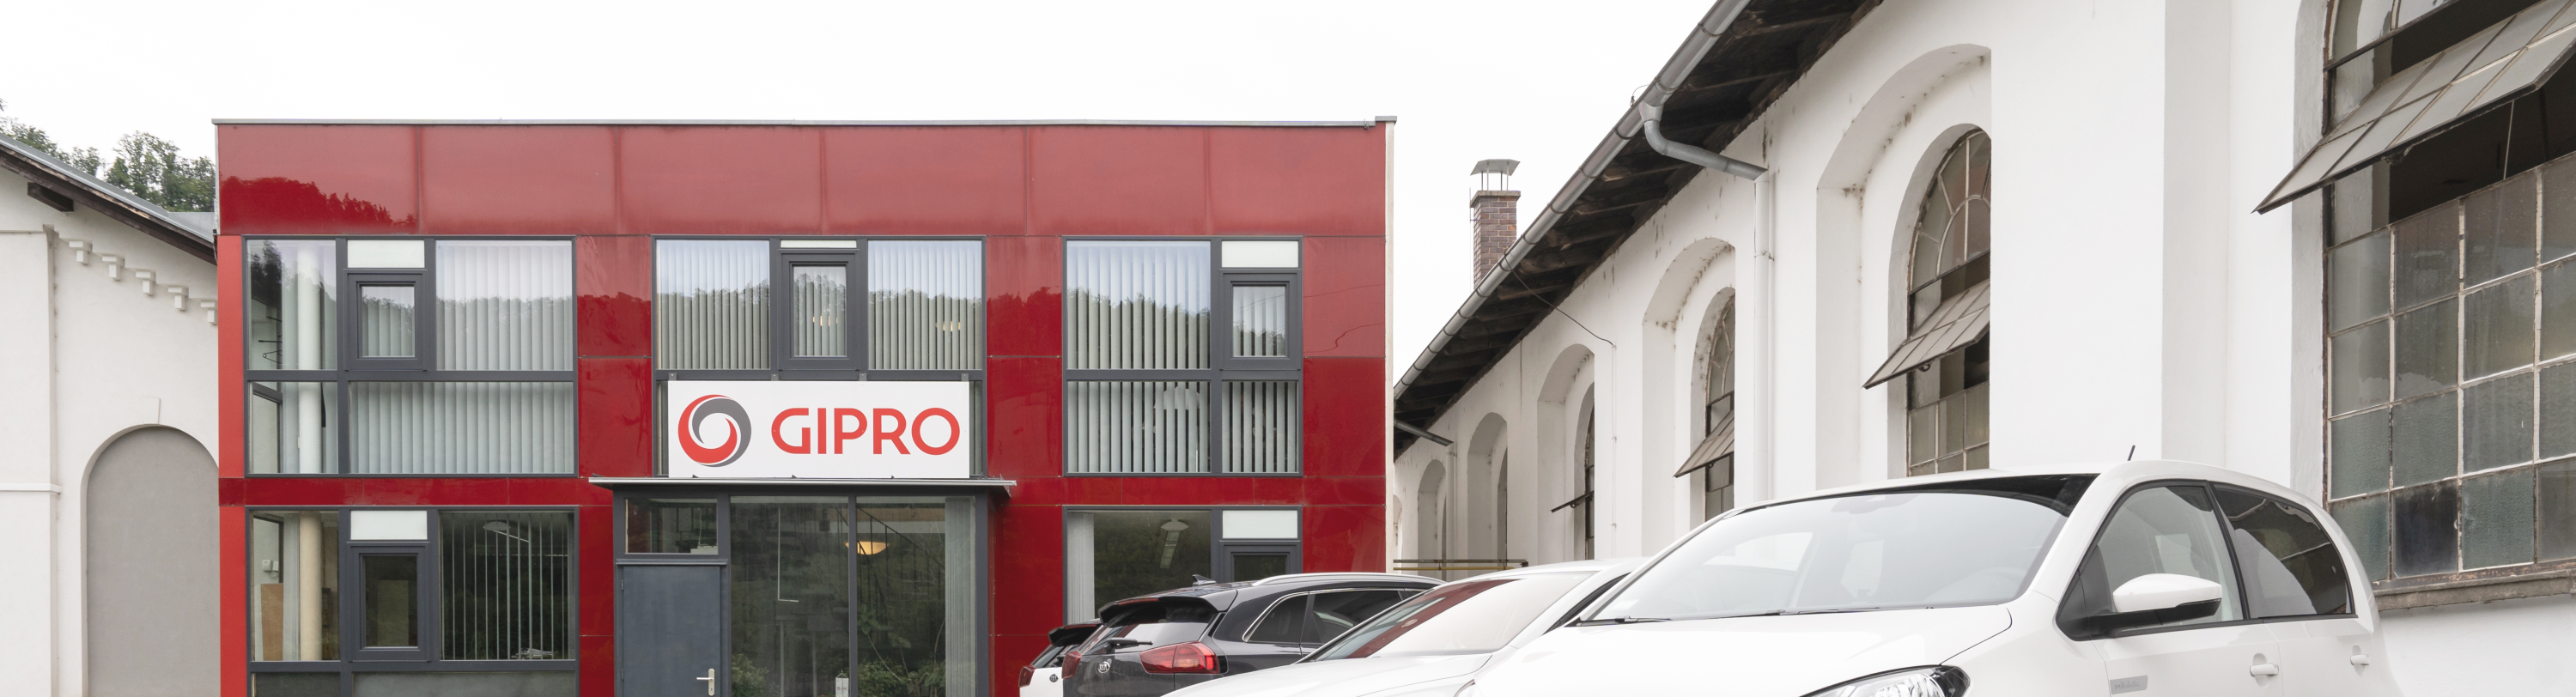 GIPRO insulalators headquarter in Peggau, Austria